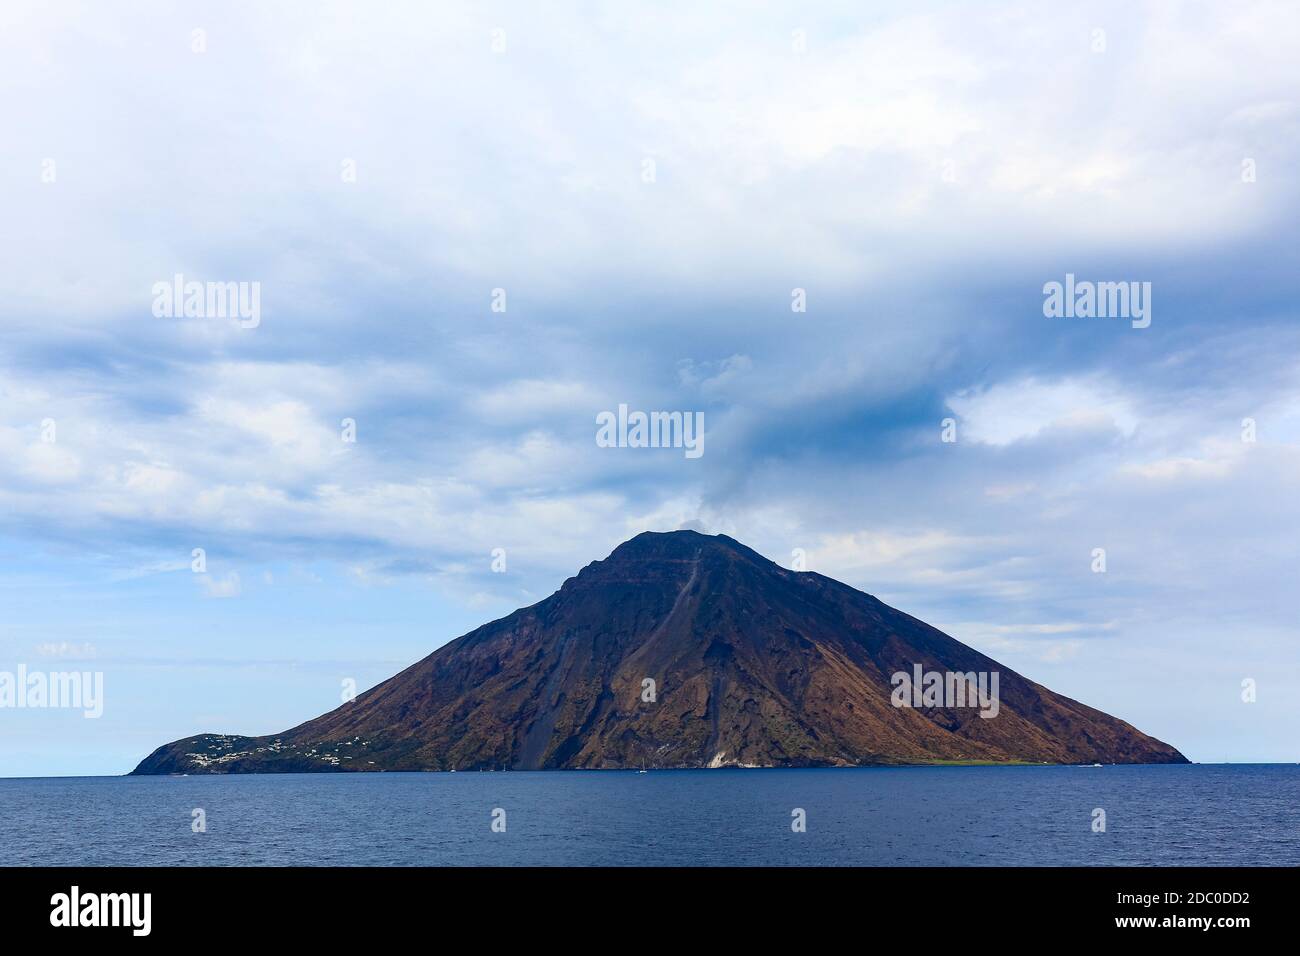 Sicily, Italy. The volcanic island of Stromboli rises from the Tyrrhenian Sea. Stock Photo